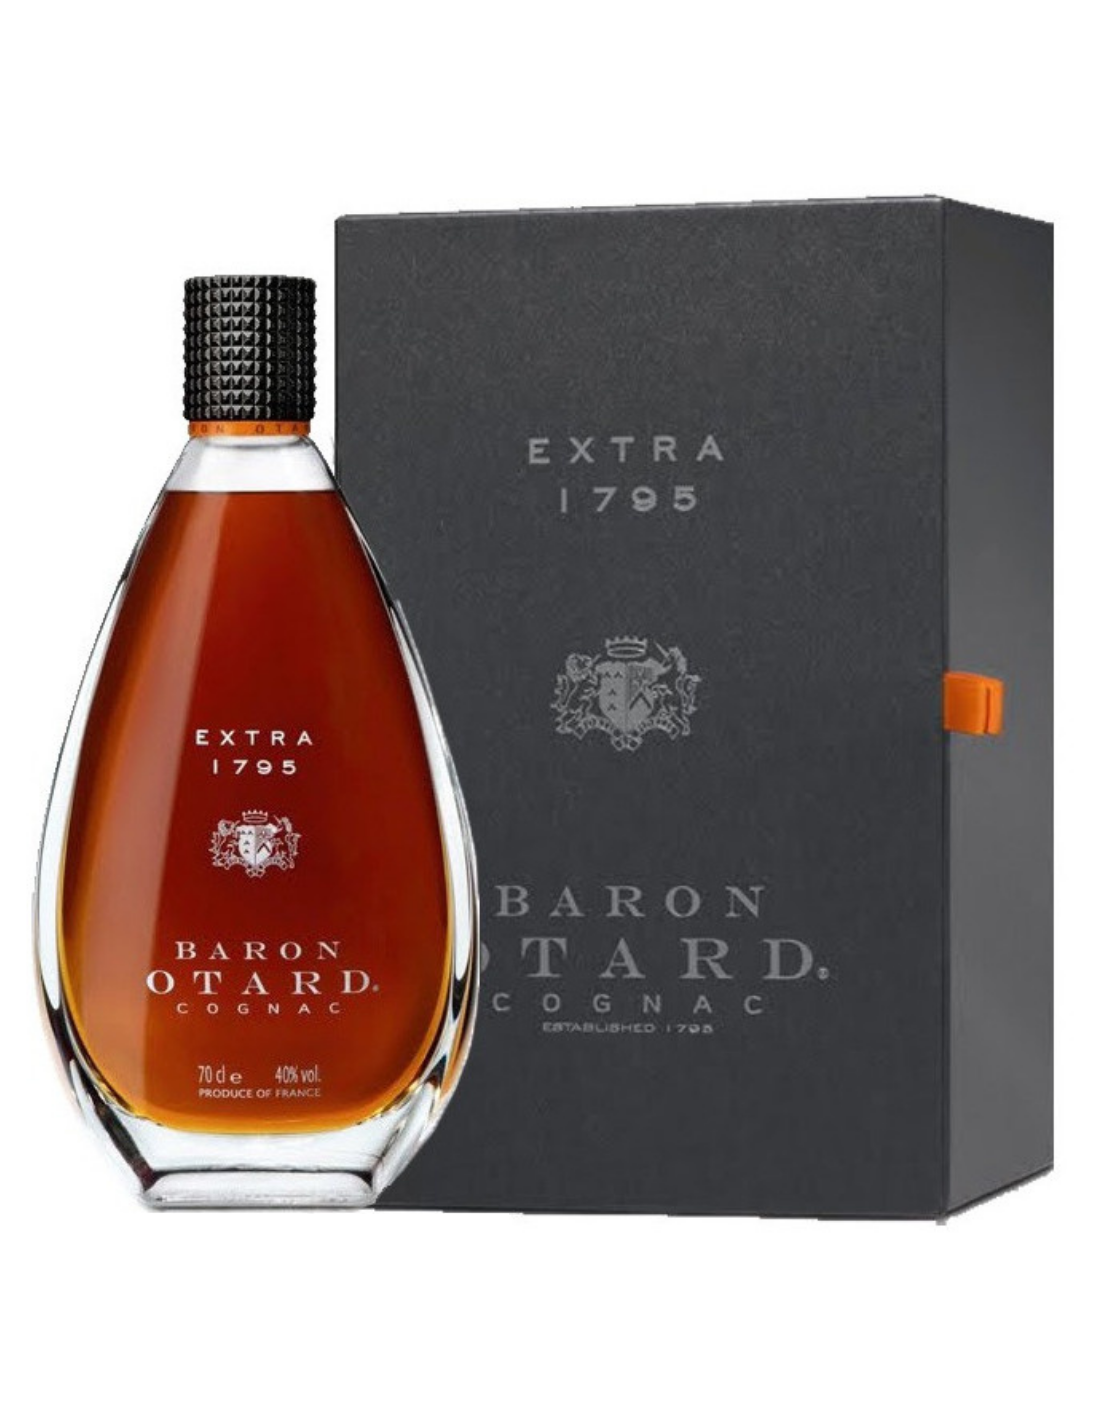 Coniac Baron Otard Extra 1795, 40% alc., 0.7L, Franta alcooldiscount.ro